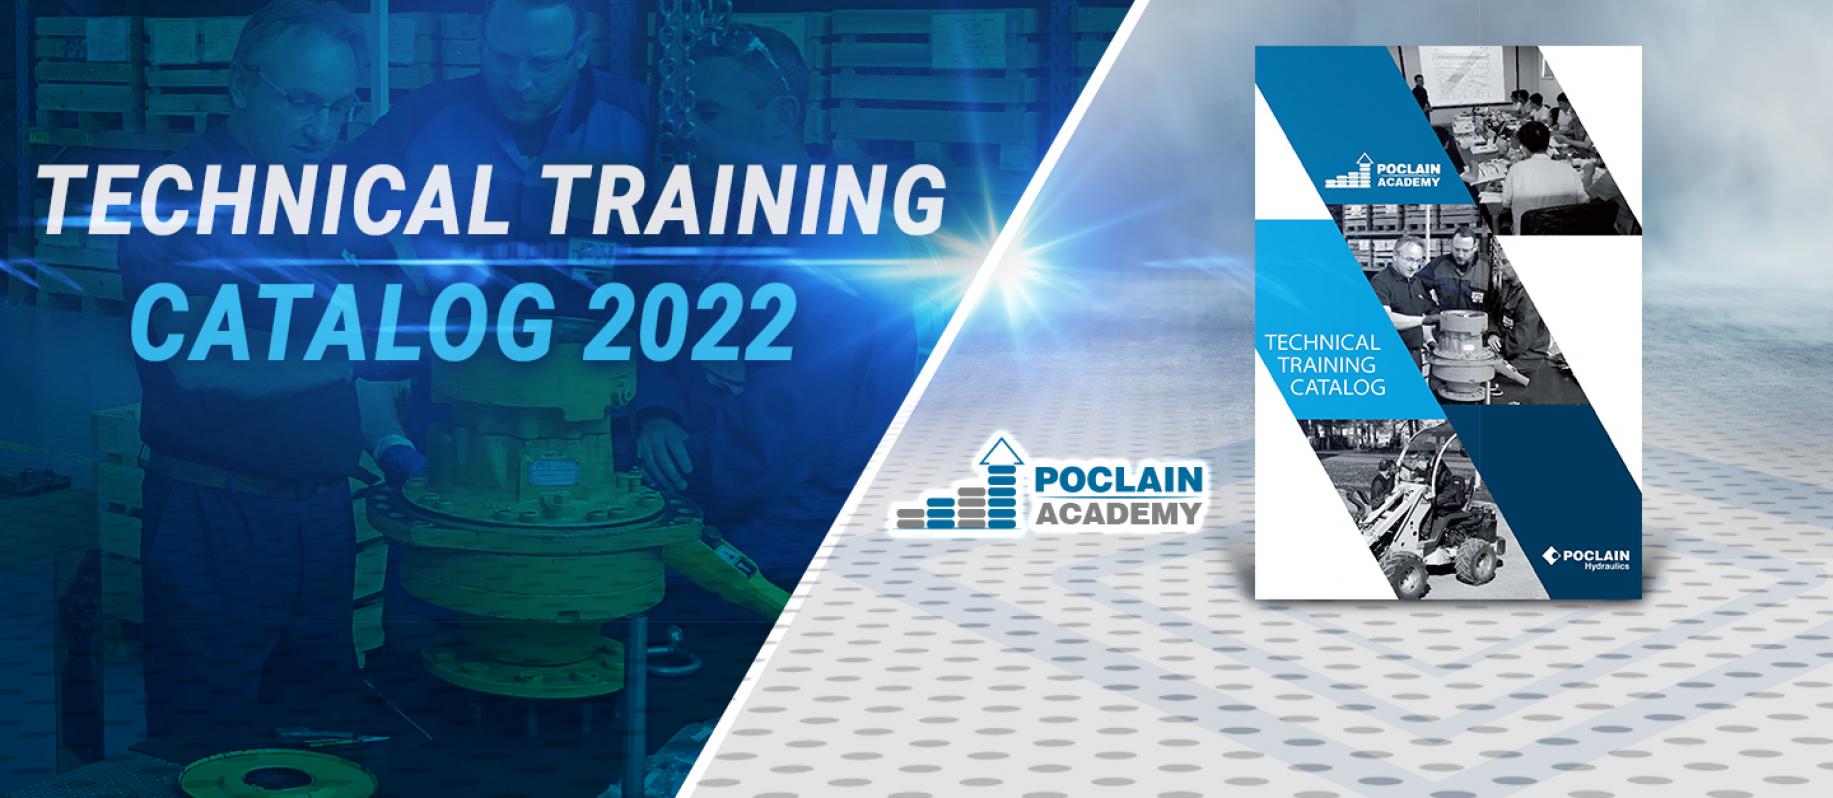 Technical Training Catalog 2022